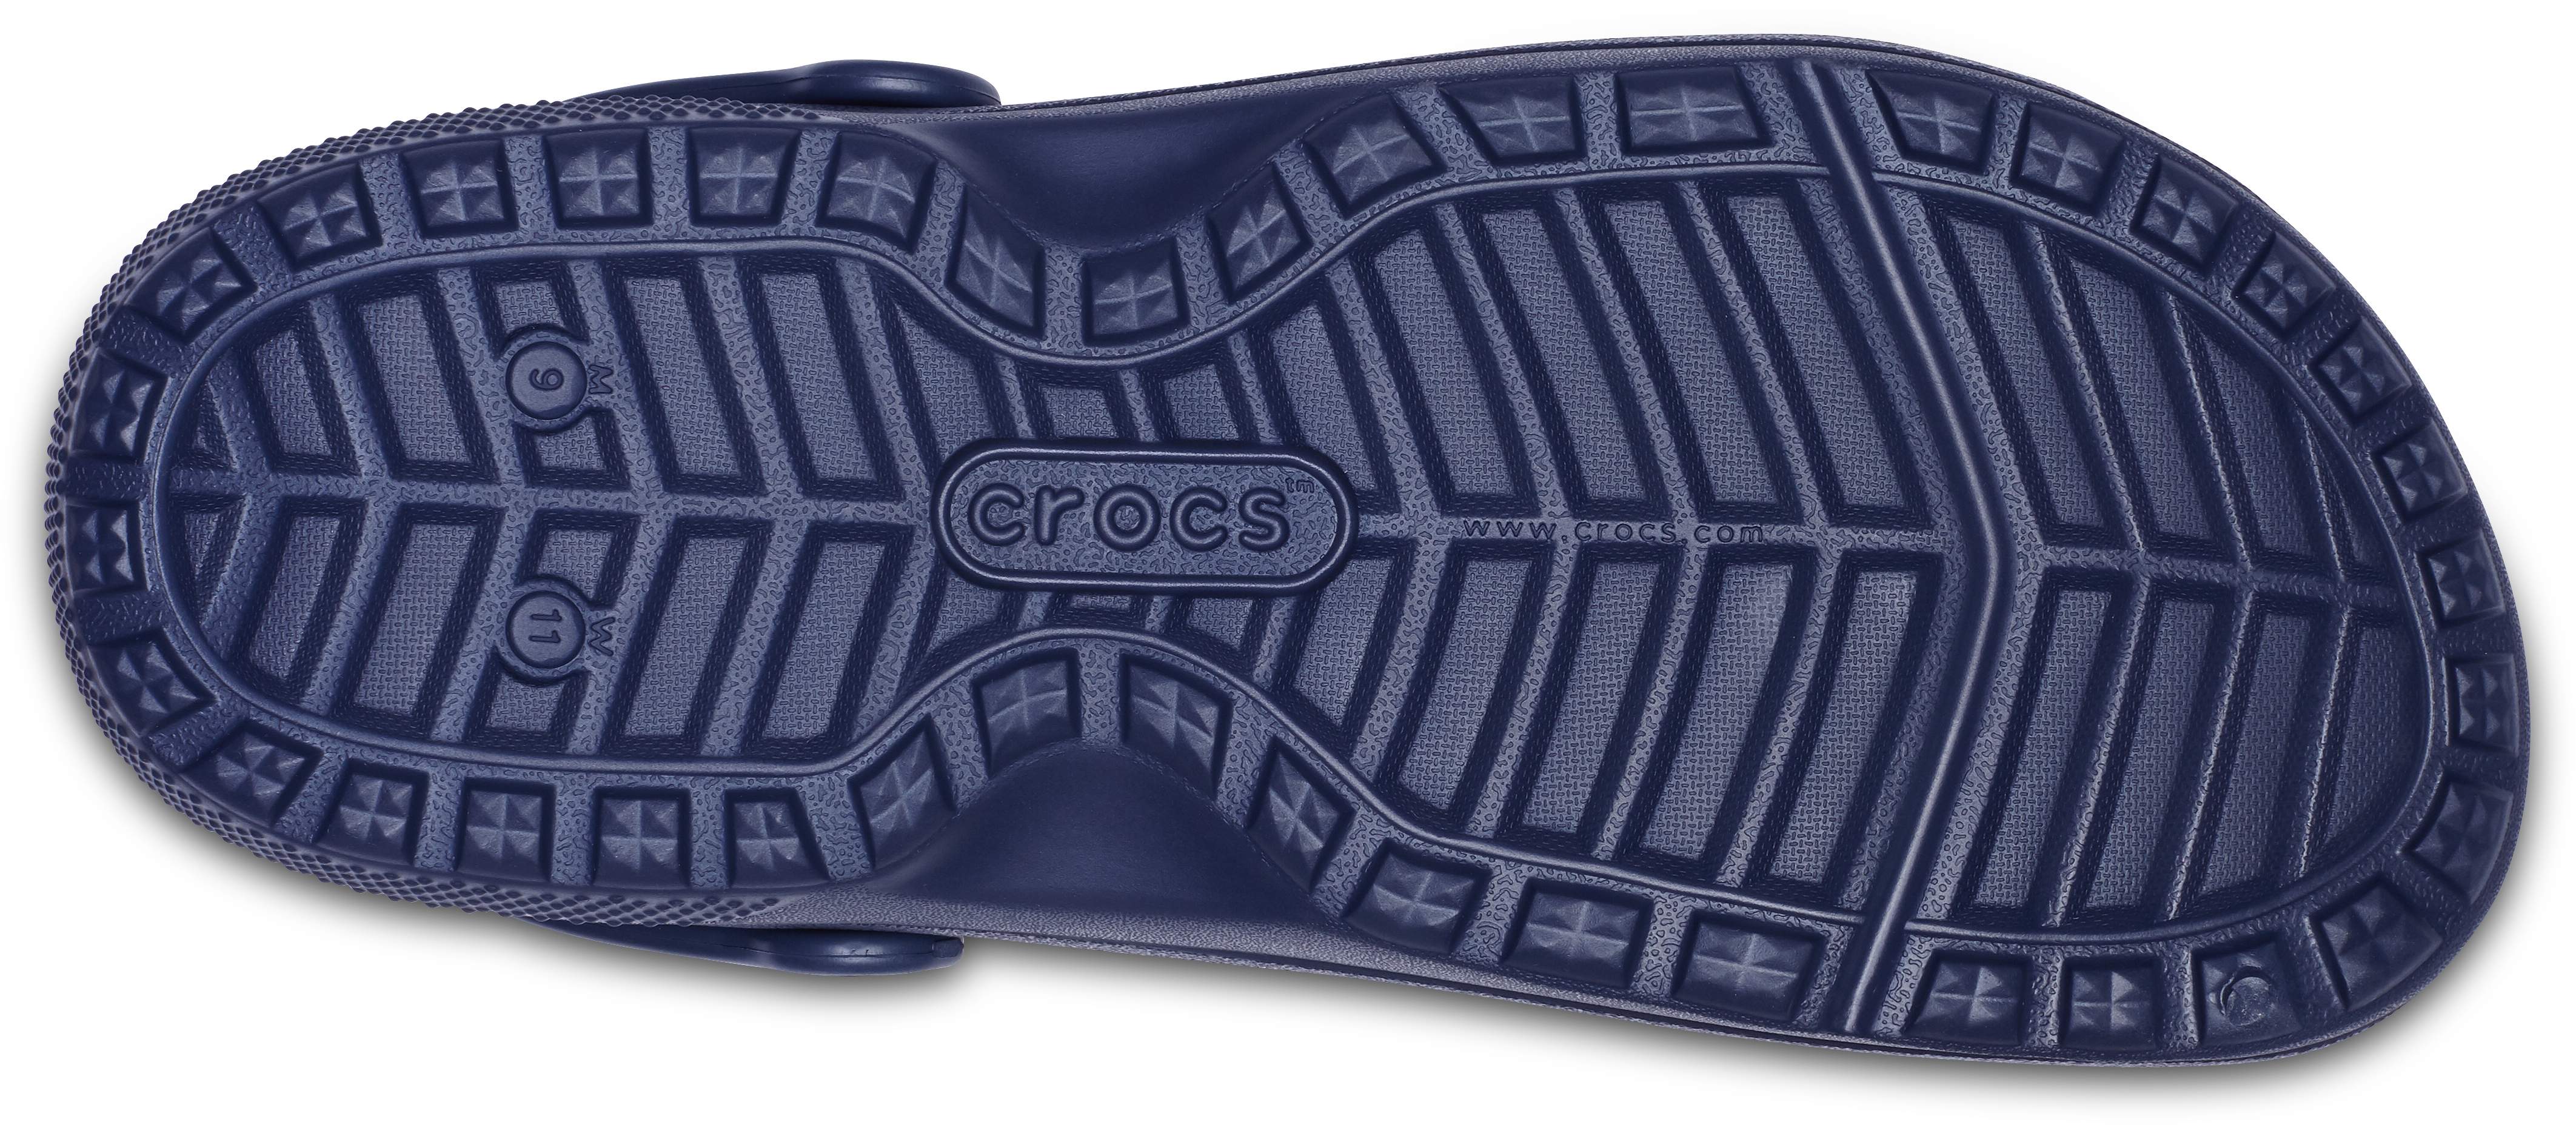 crocs walking shoes